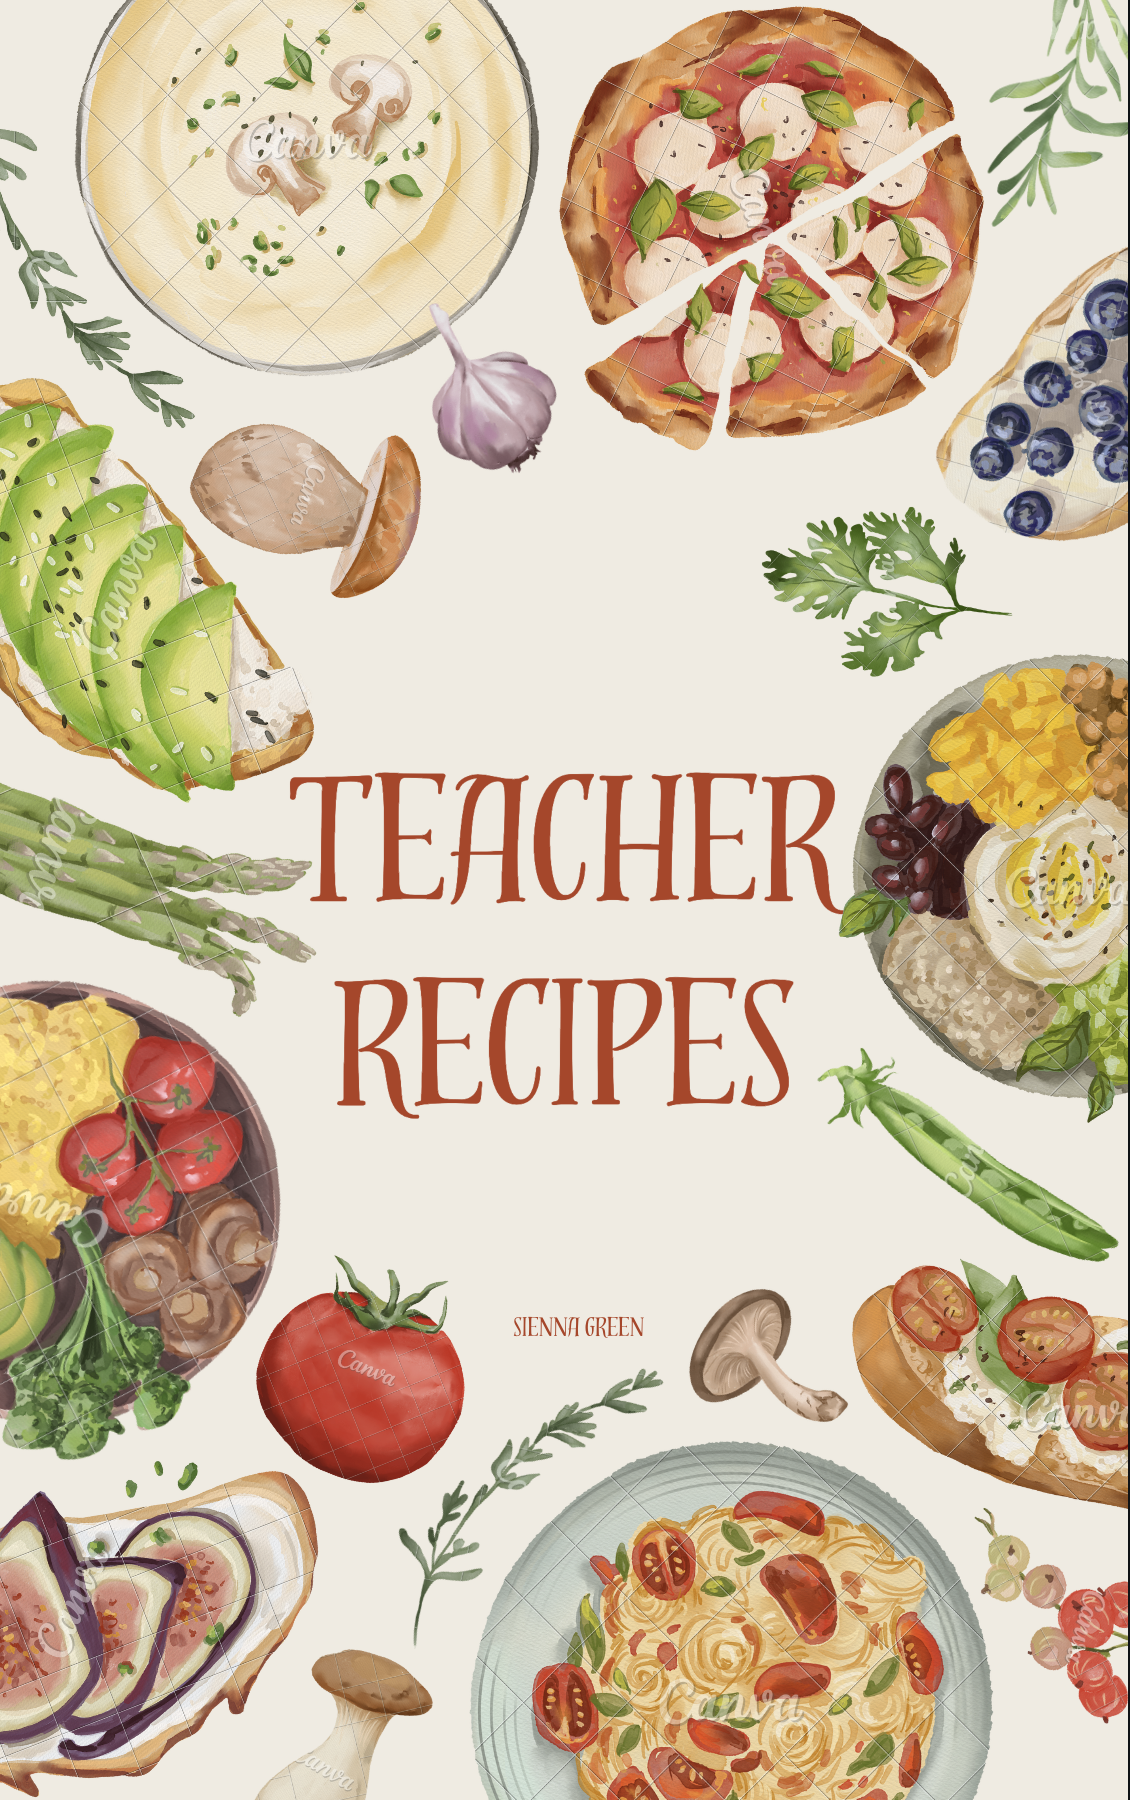 Teacher Tales - Thanksgiving Recipes